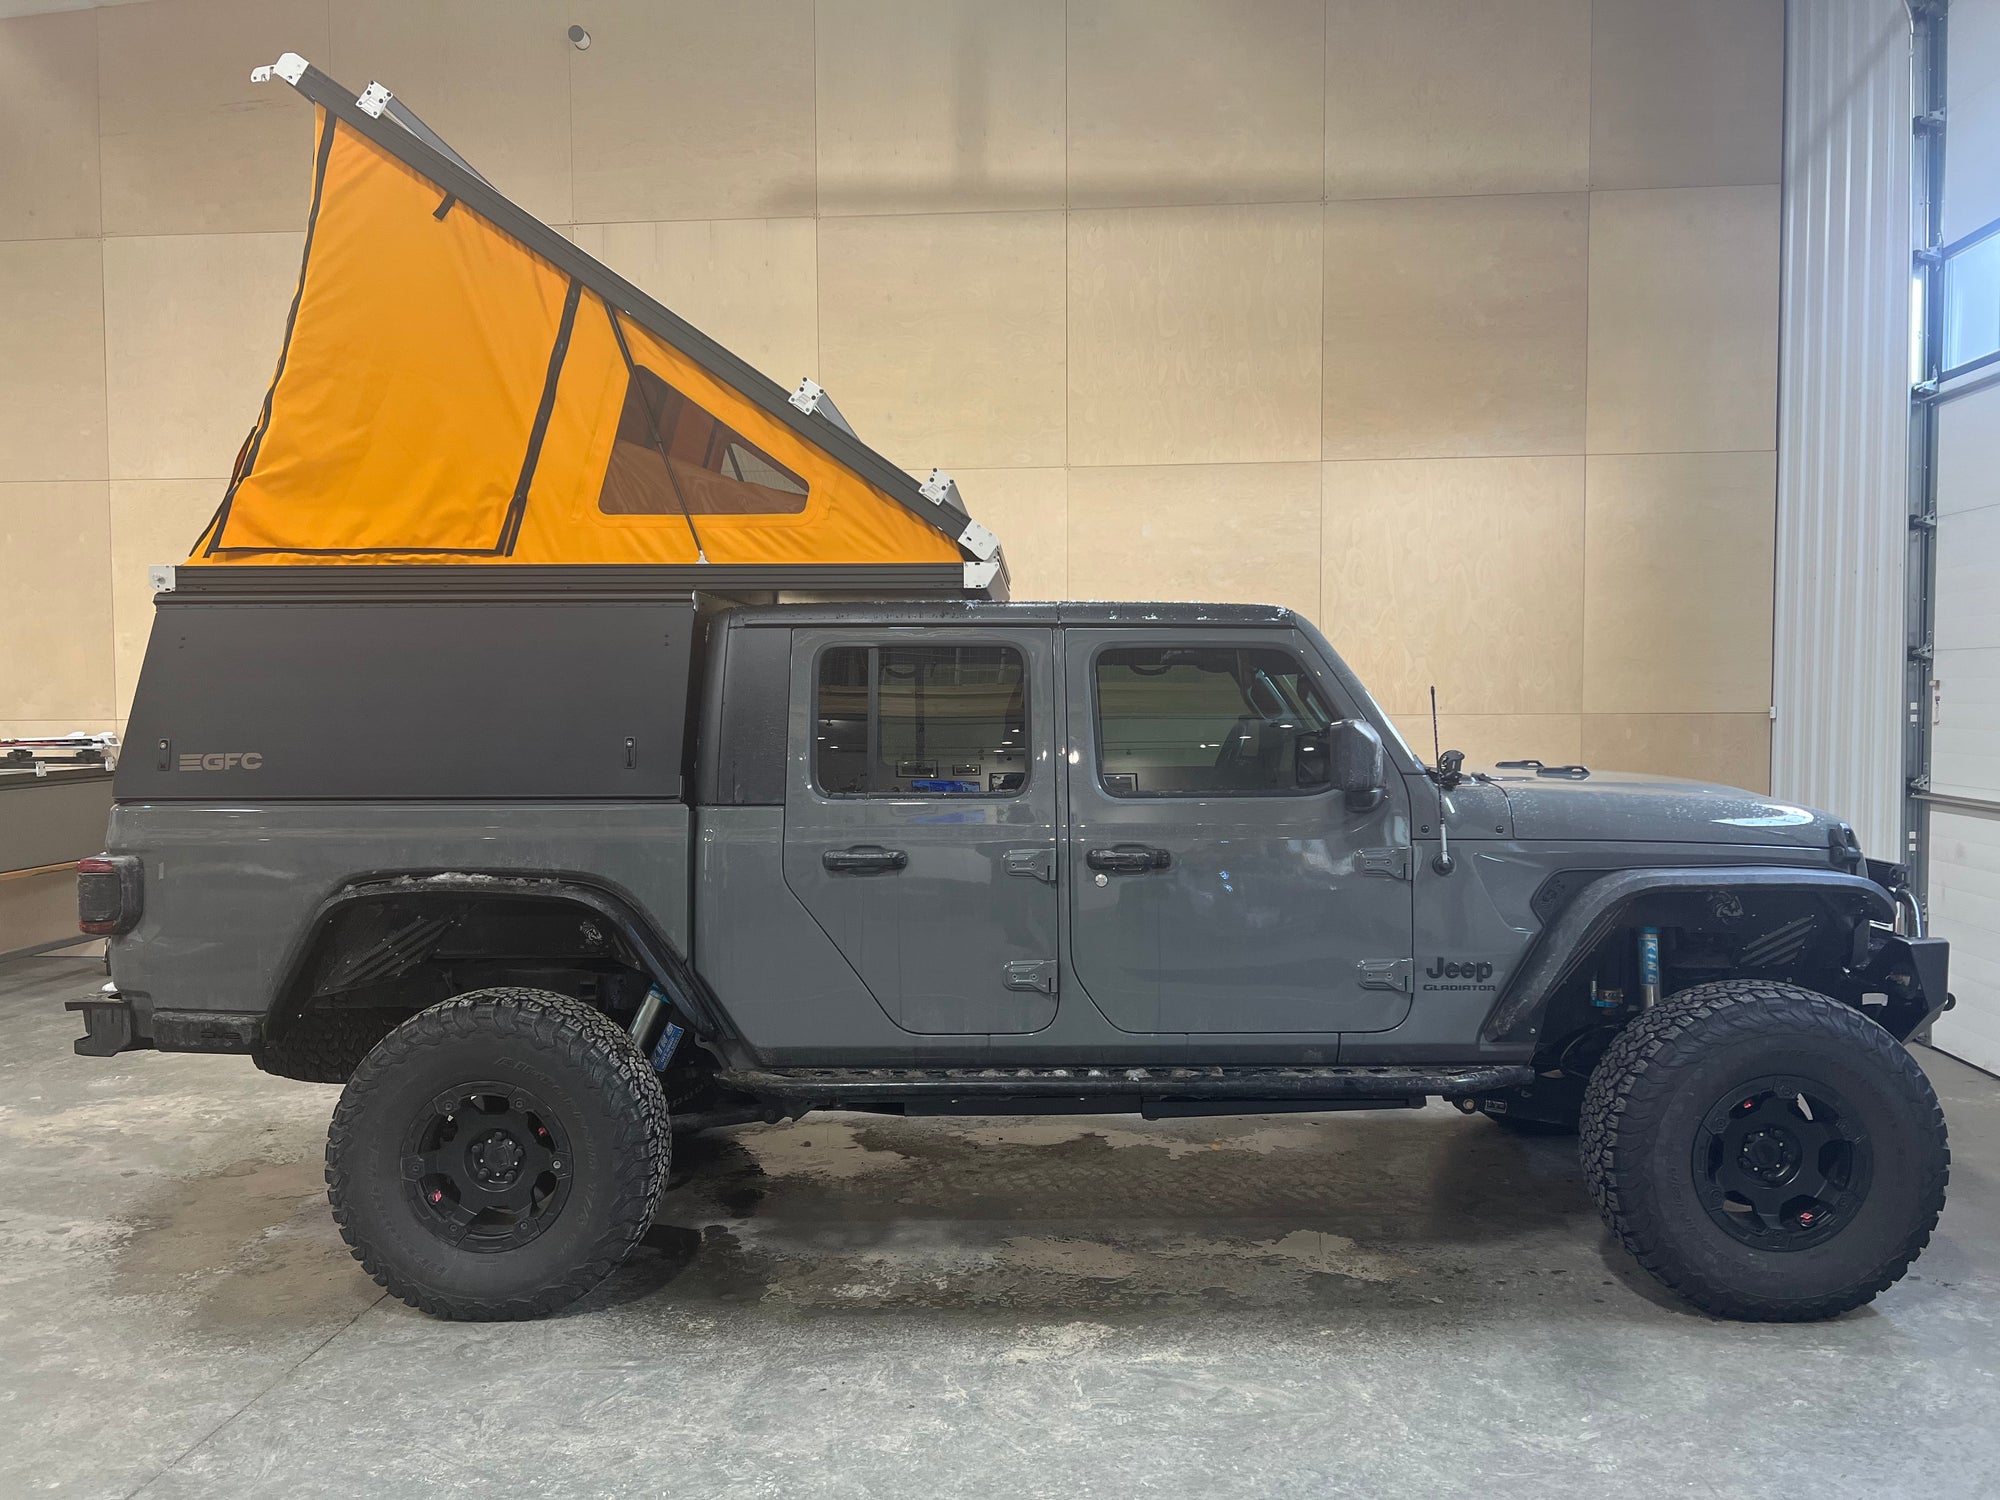 2020 Jeep Gladiator Camper - Build #4990